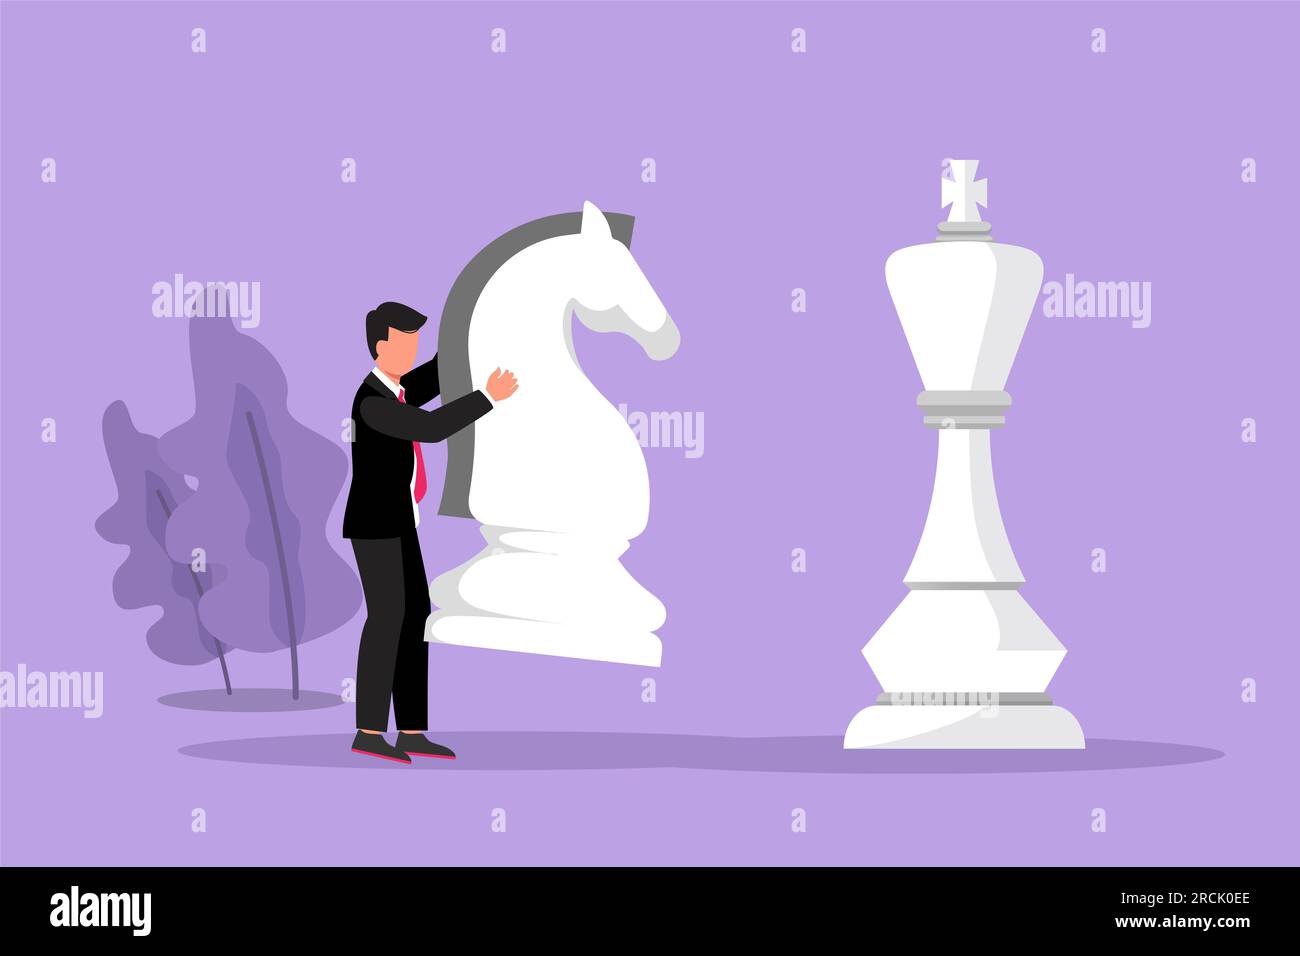 Illustrator Tutorial: A Knight Chess Piece